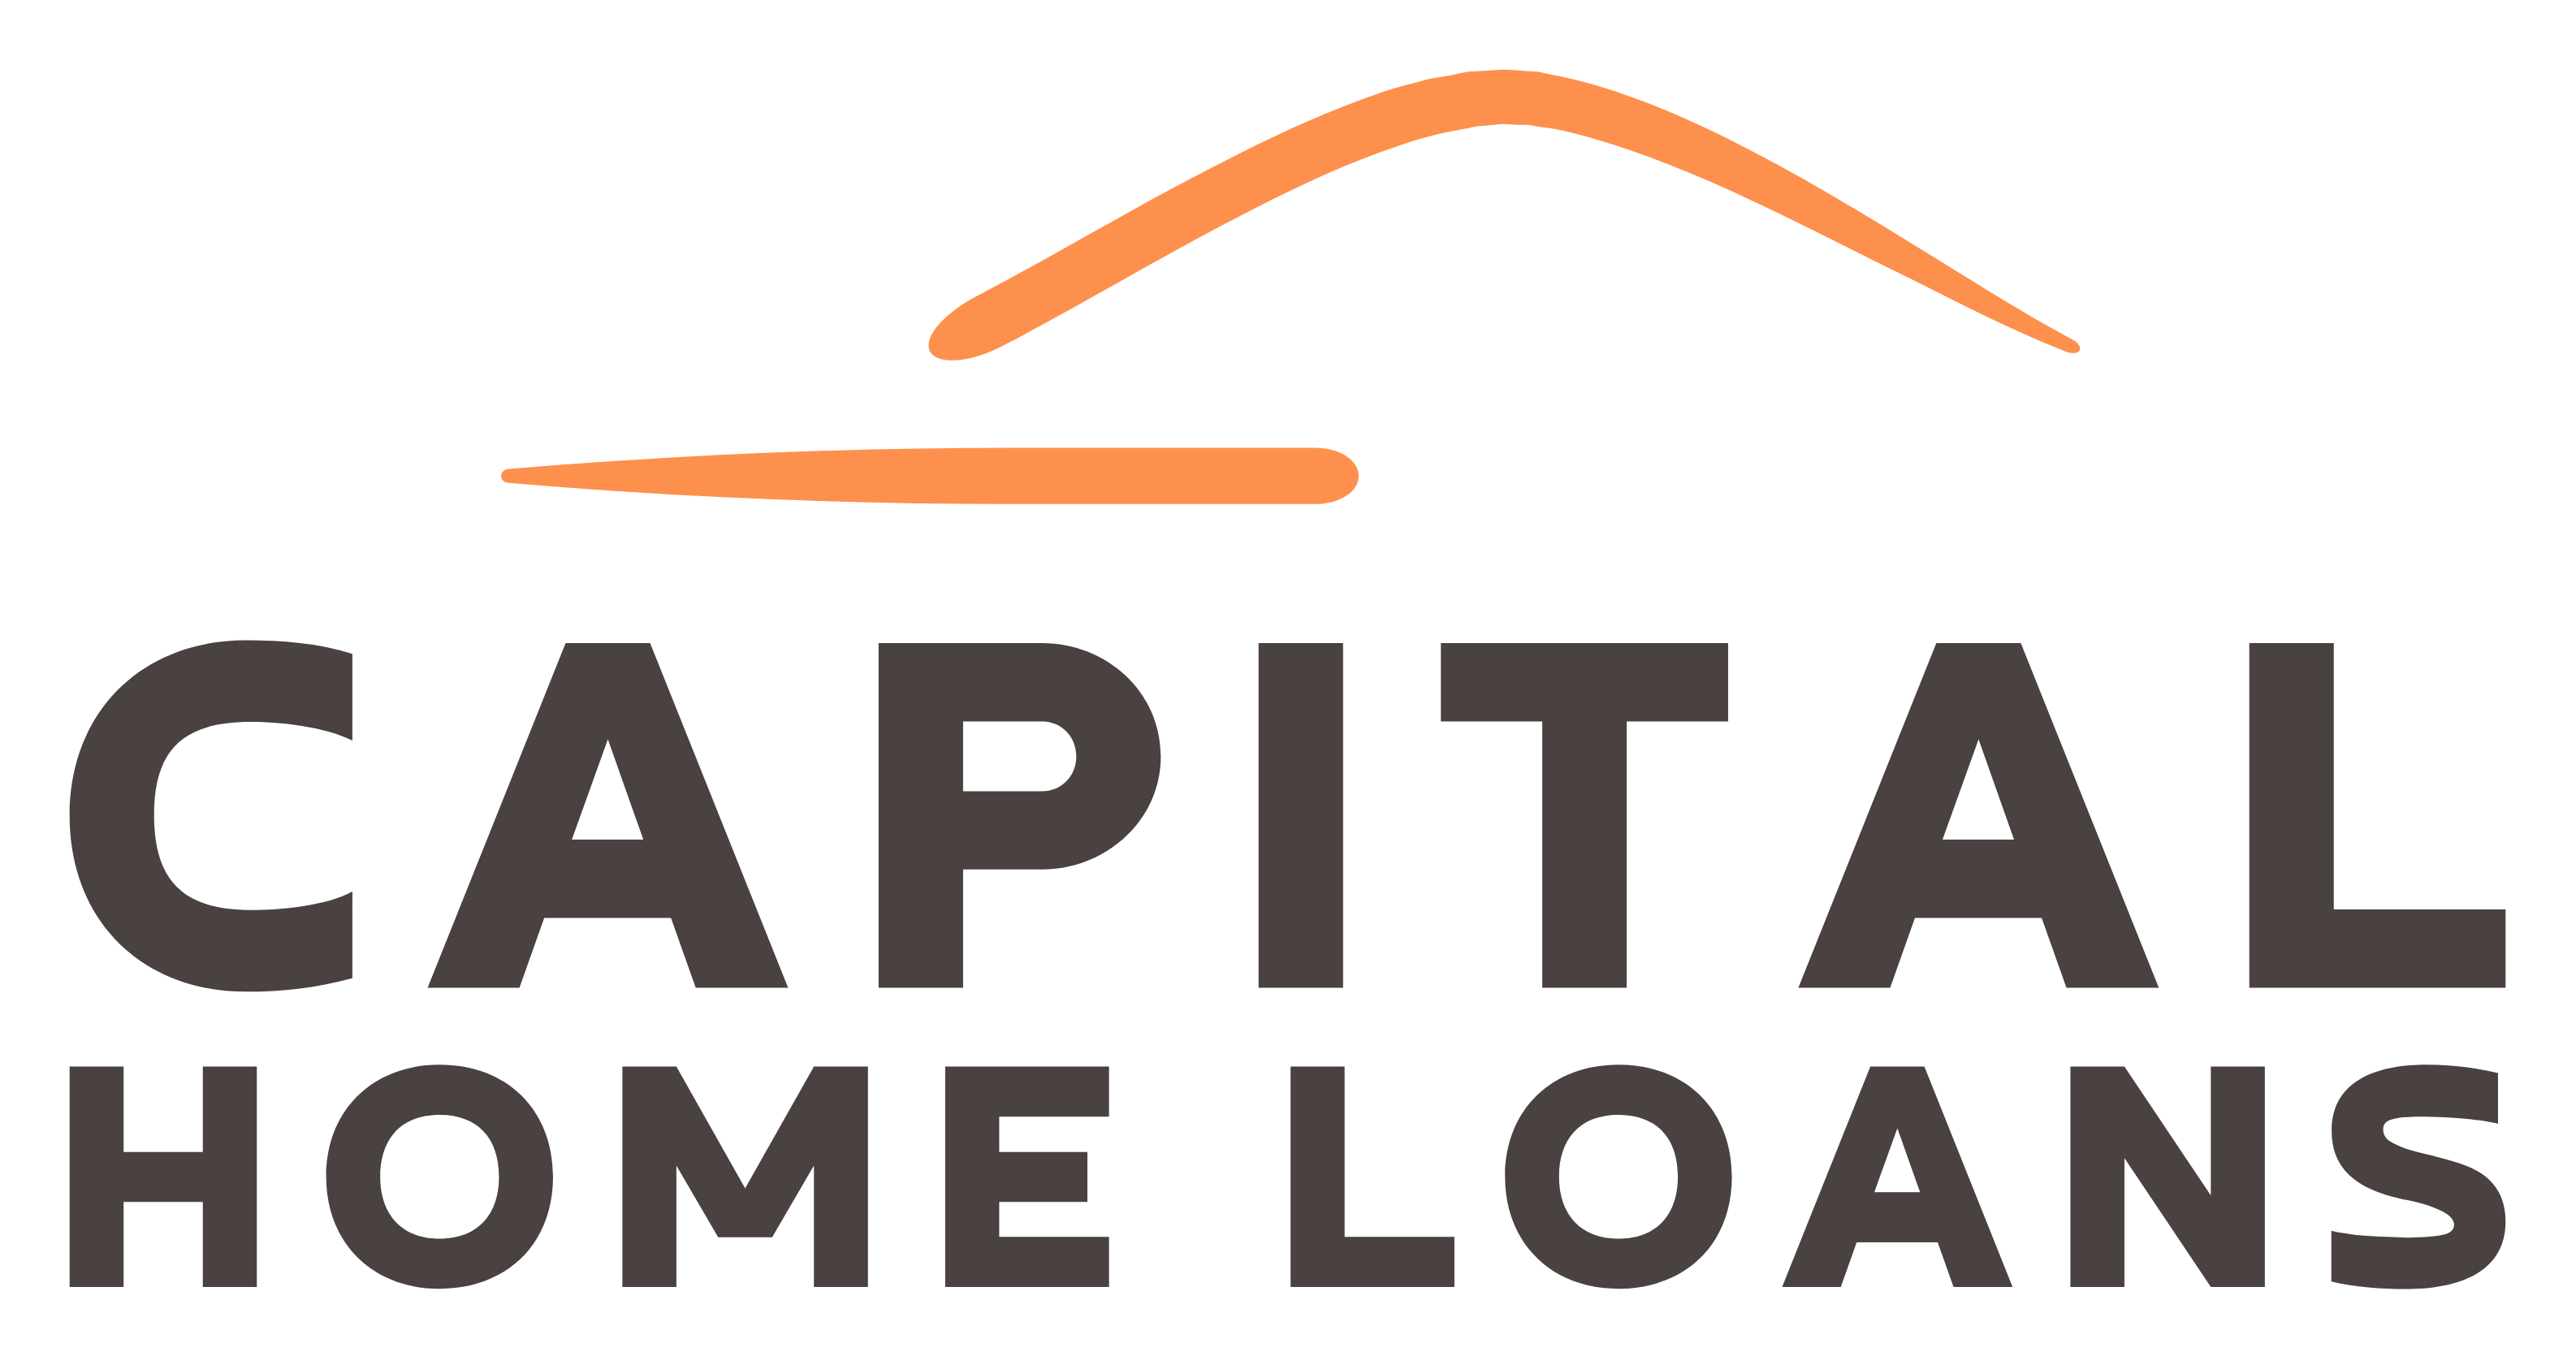 Capital Home Loans